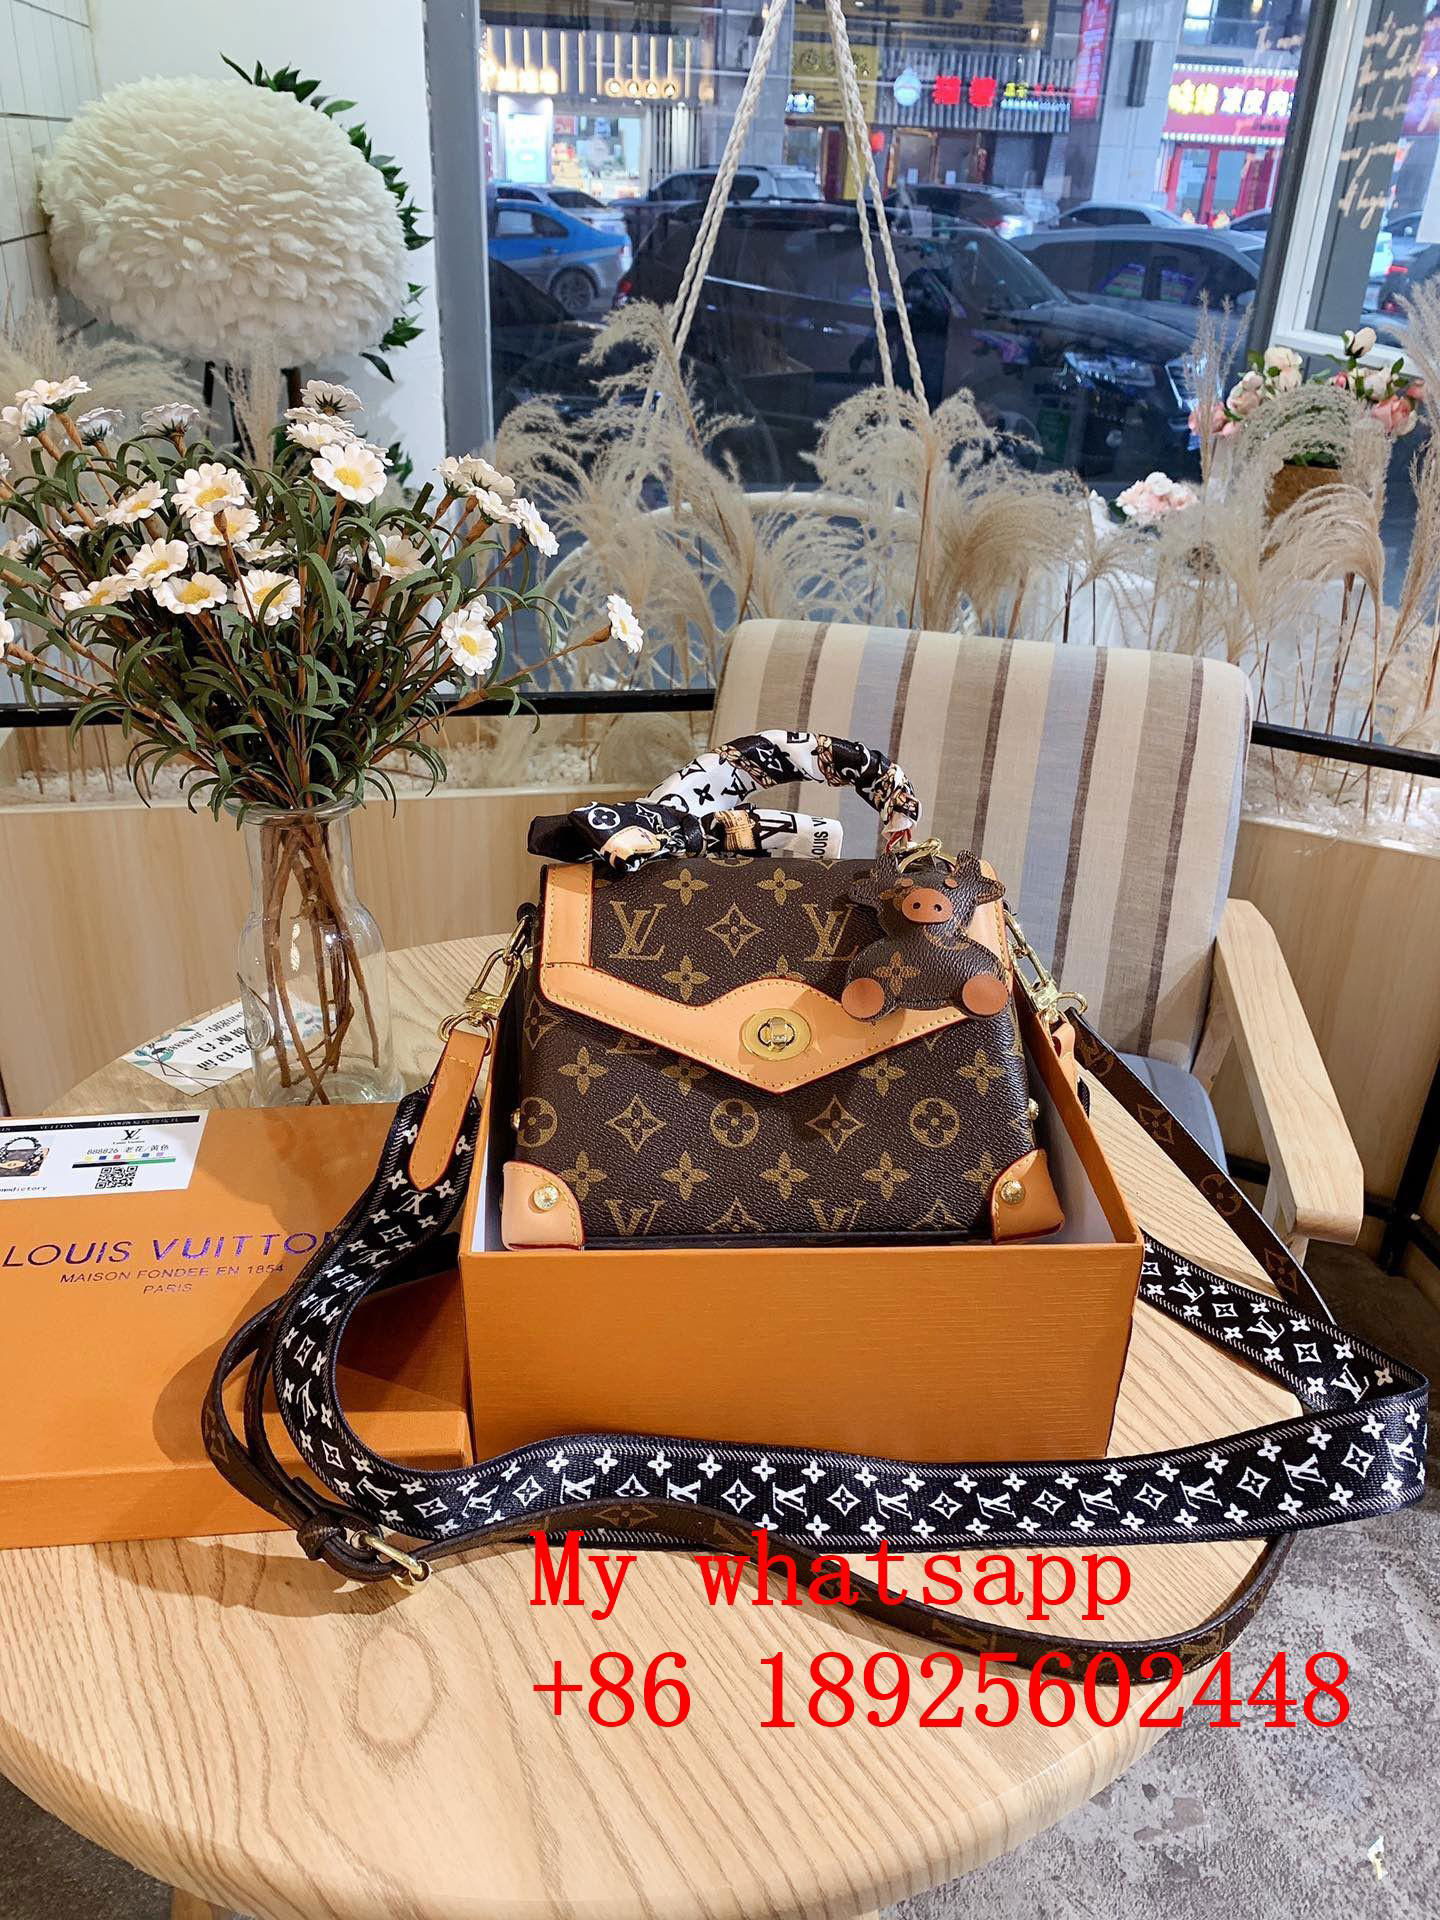 Wholesale     andbags     urse     ross Bag     ackPack     allet Leather Bag 3